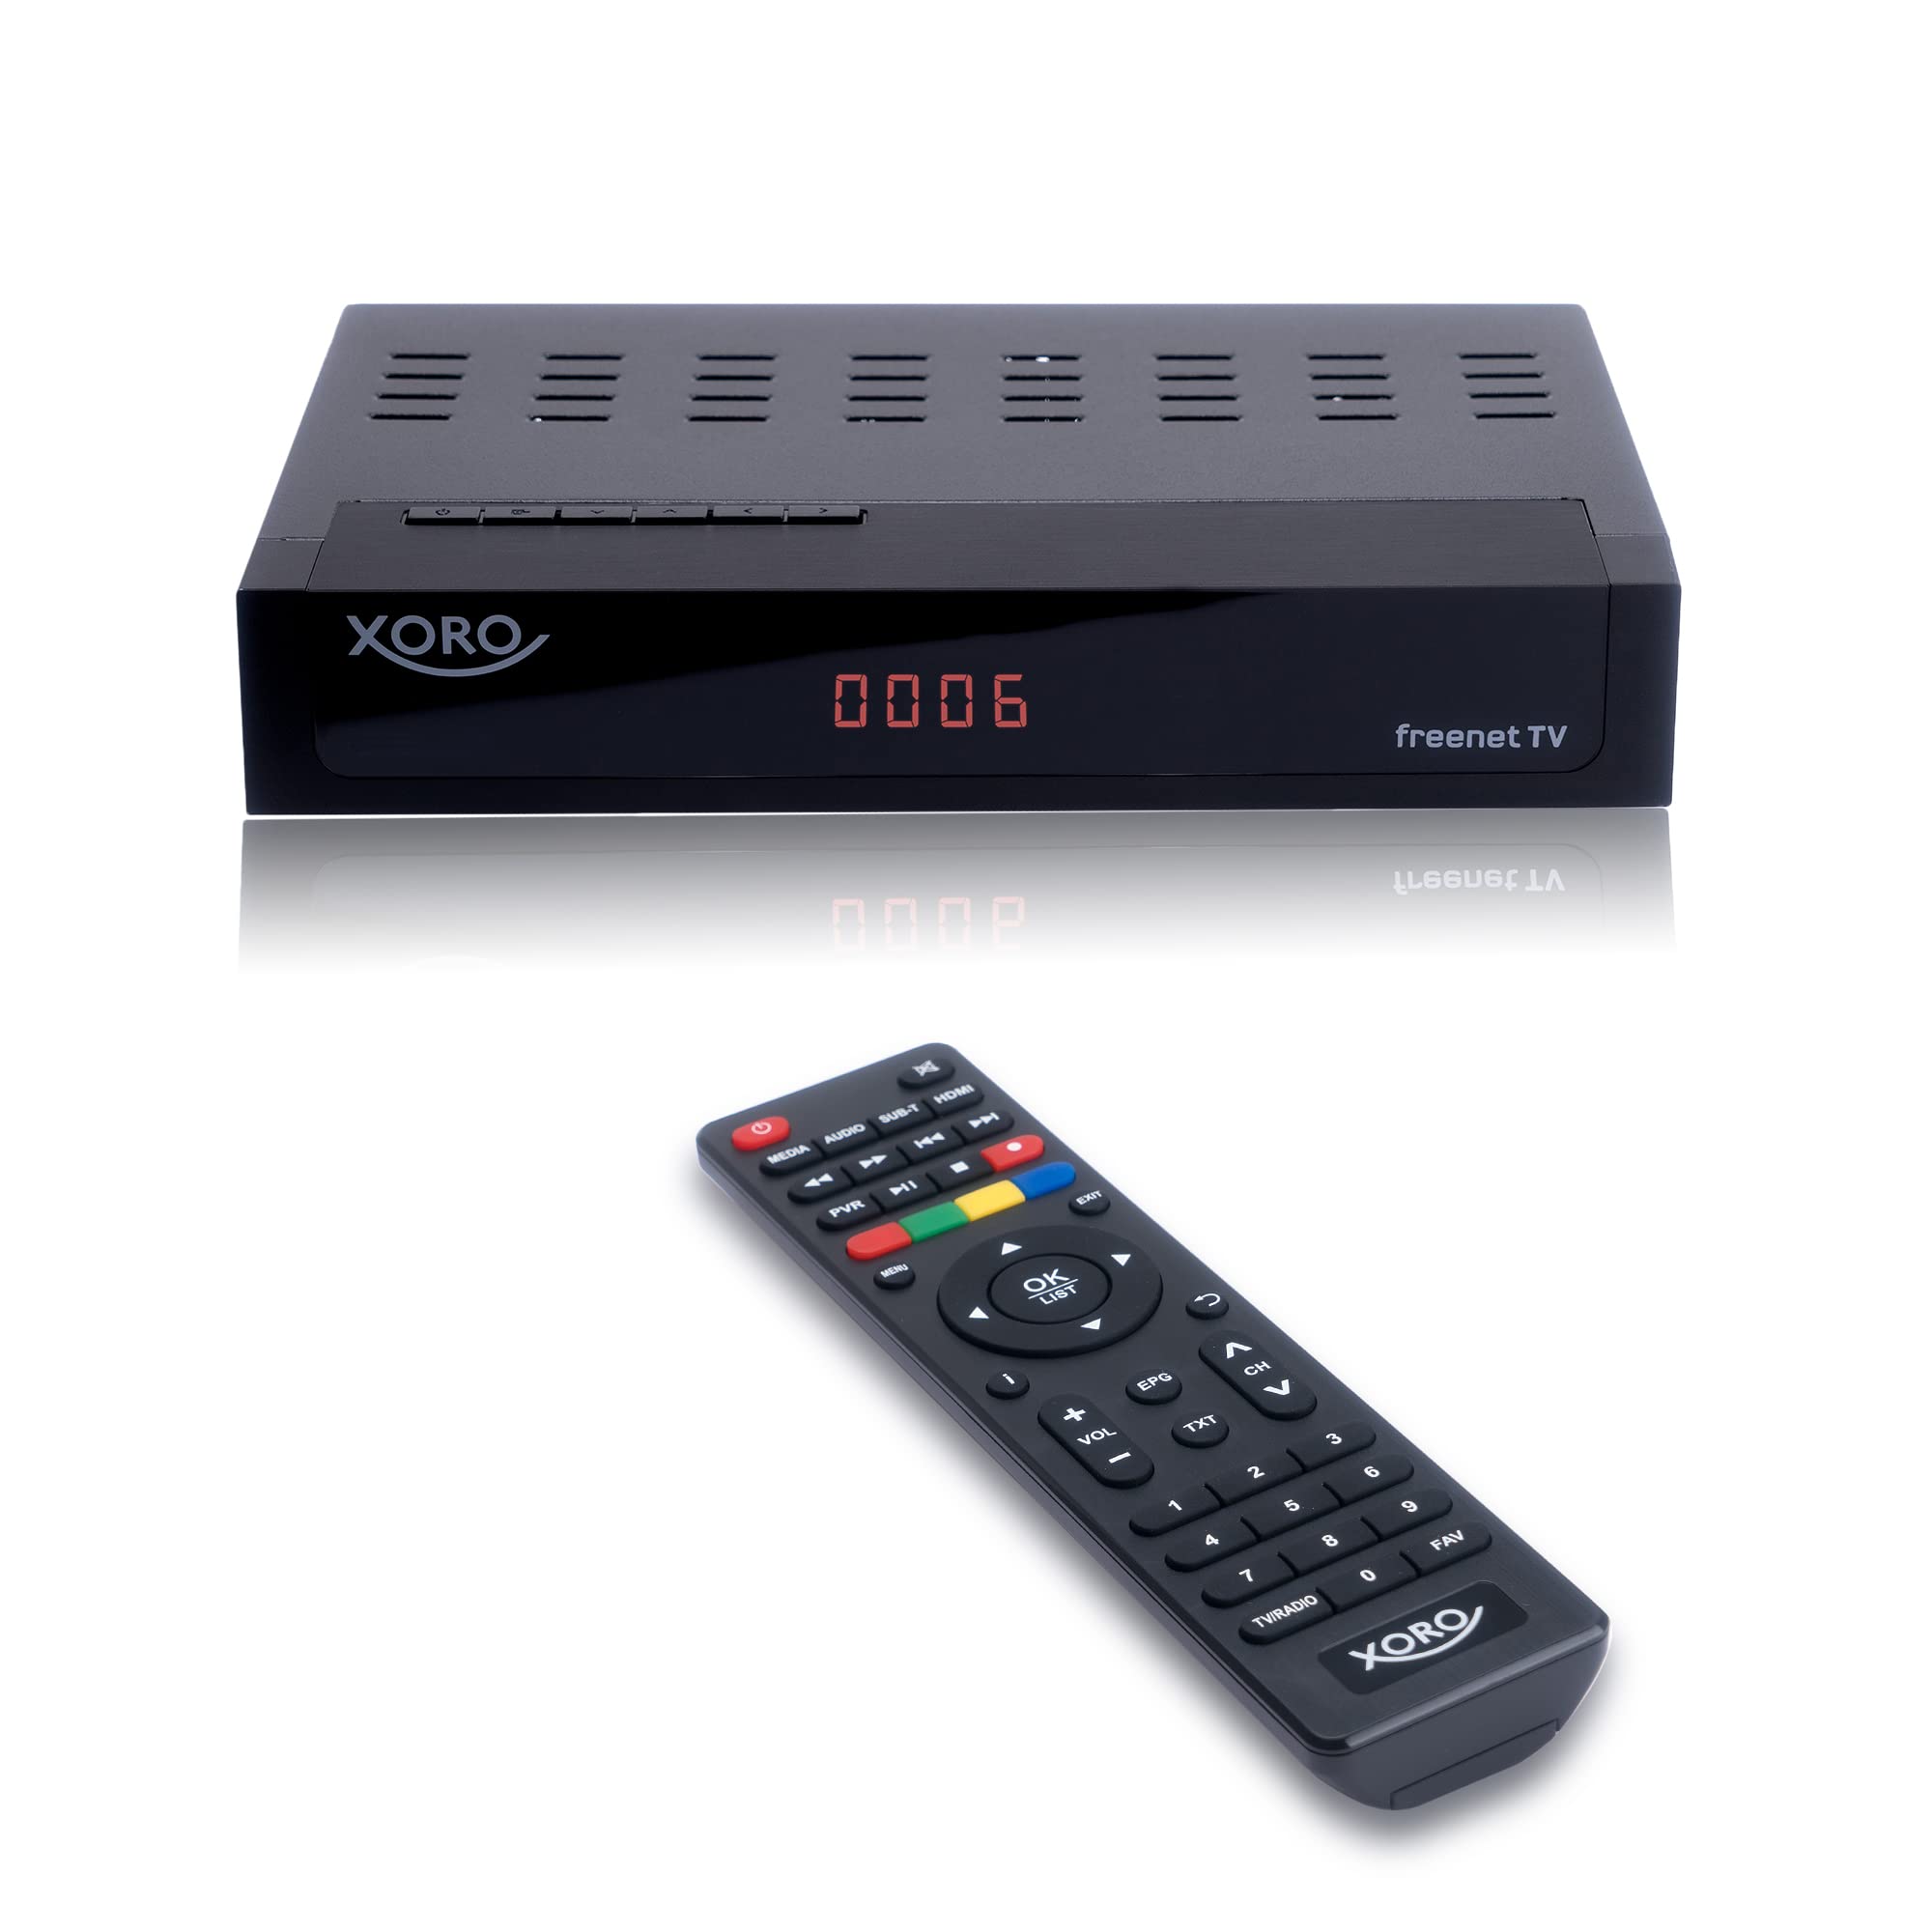 XORO HRT 8770 TWIN - DVB-T2 FullHD Receiver, integriertes Freenet TV Entschlüsselungssystem, TWIN-Tuner (zwei Empfangsteile), PVR Ready, Timeshift, Mediaplayer